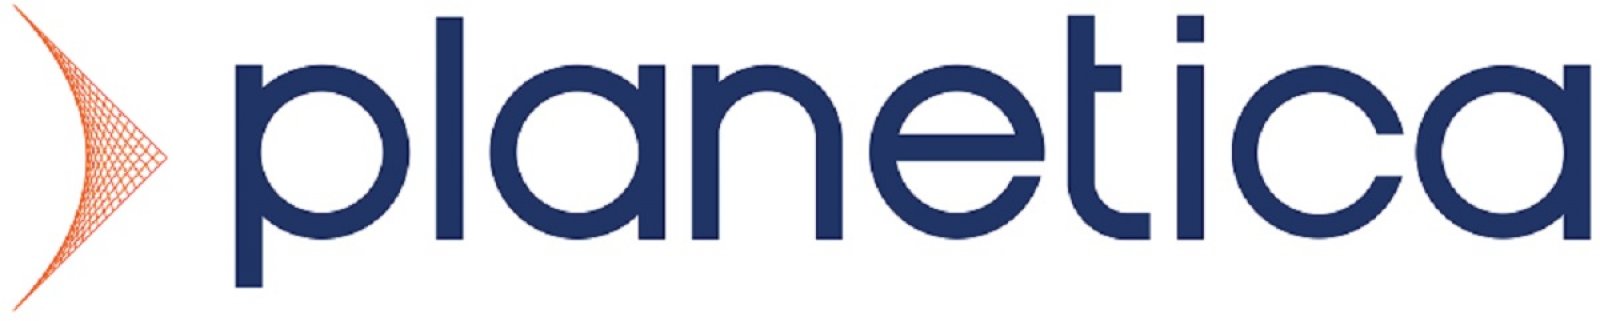 Logo Planetica